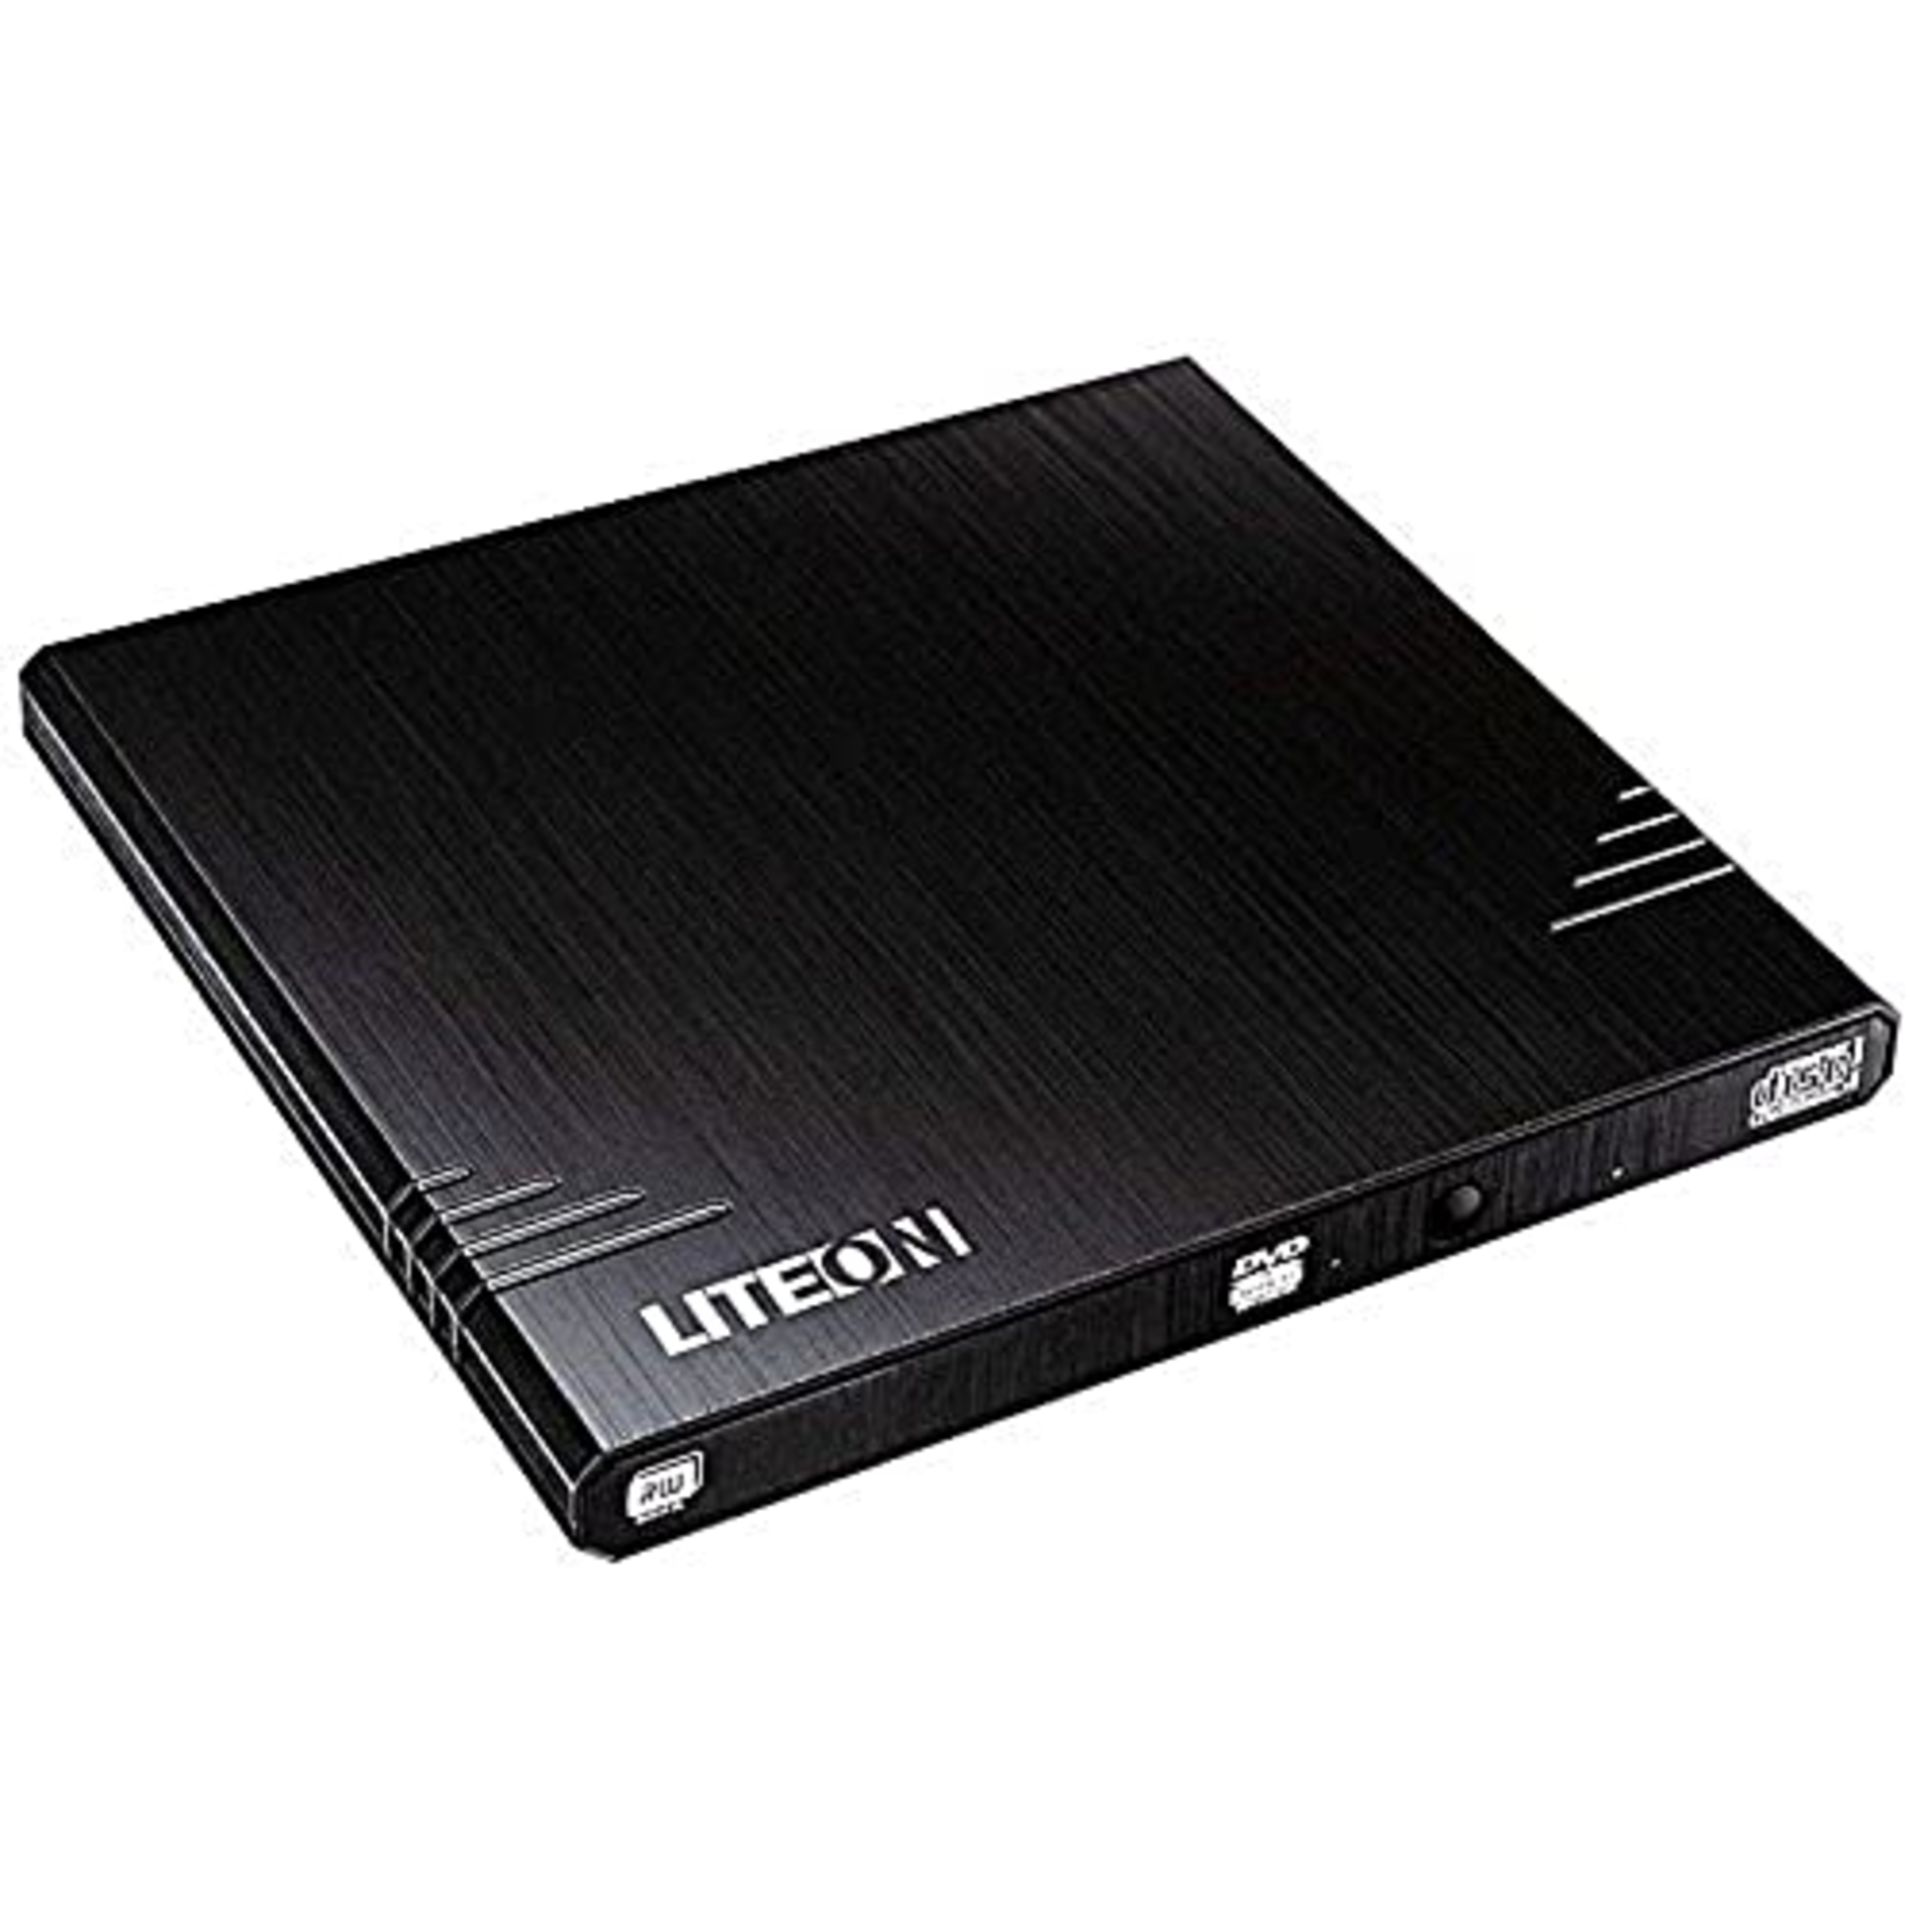 LiteOn eBAU108-11 (6) External DVD RW with Link2TV